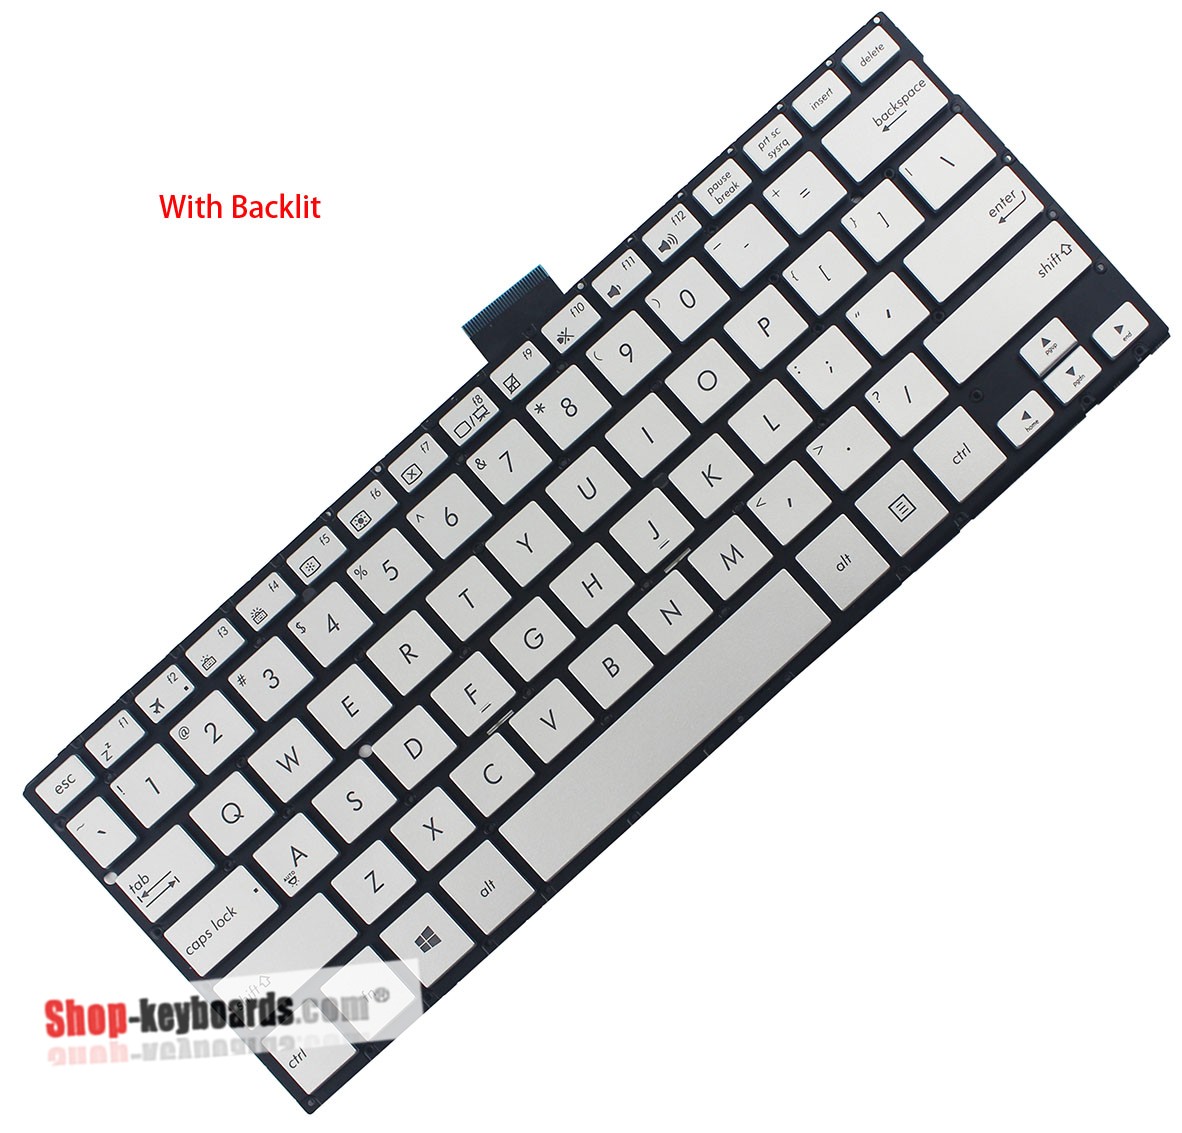 Asus Q302LA Keyboard replacement